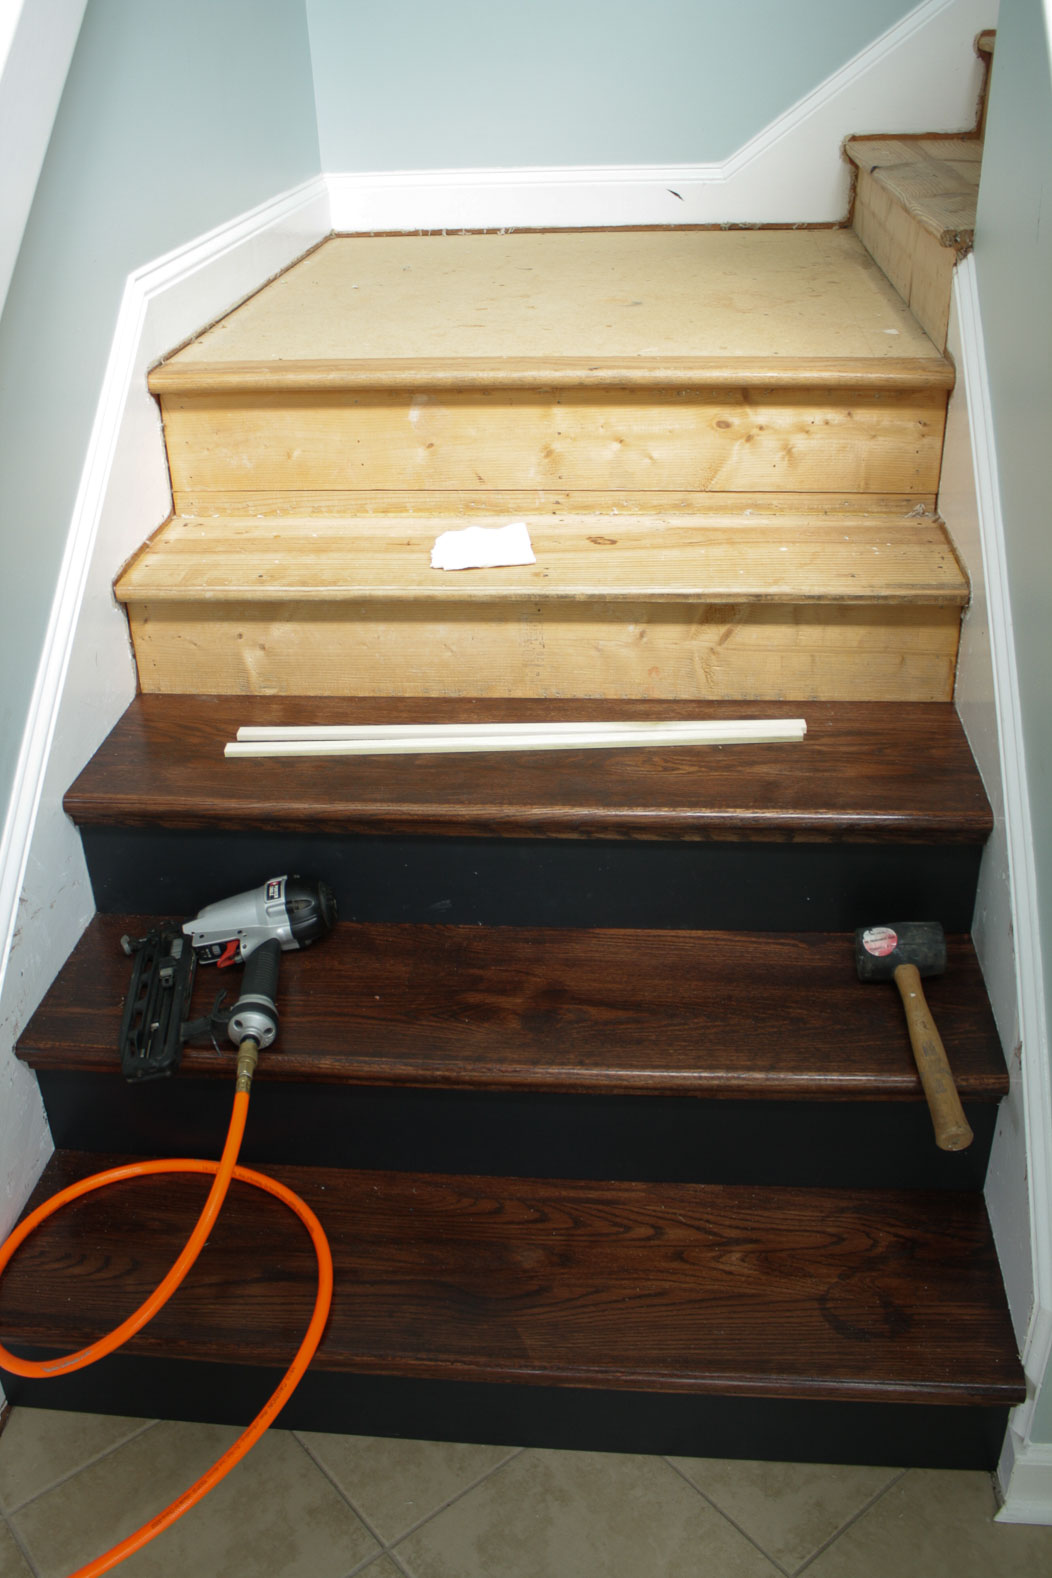 installing new hardwood stair treads